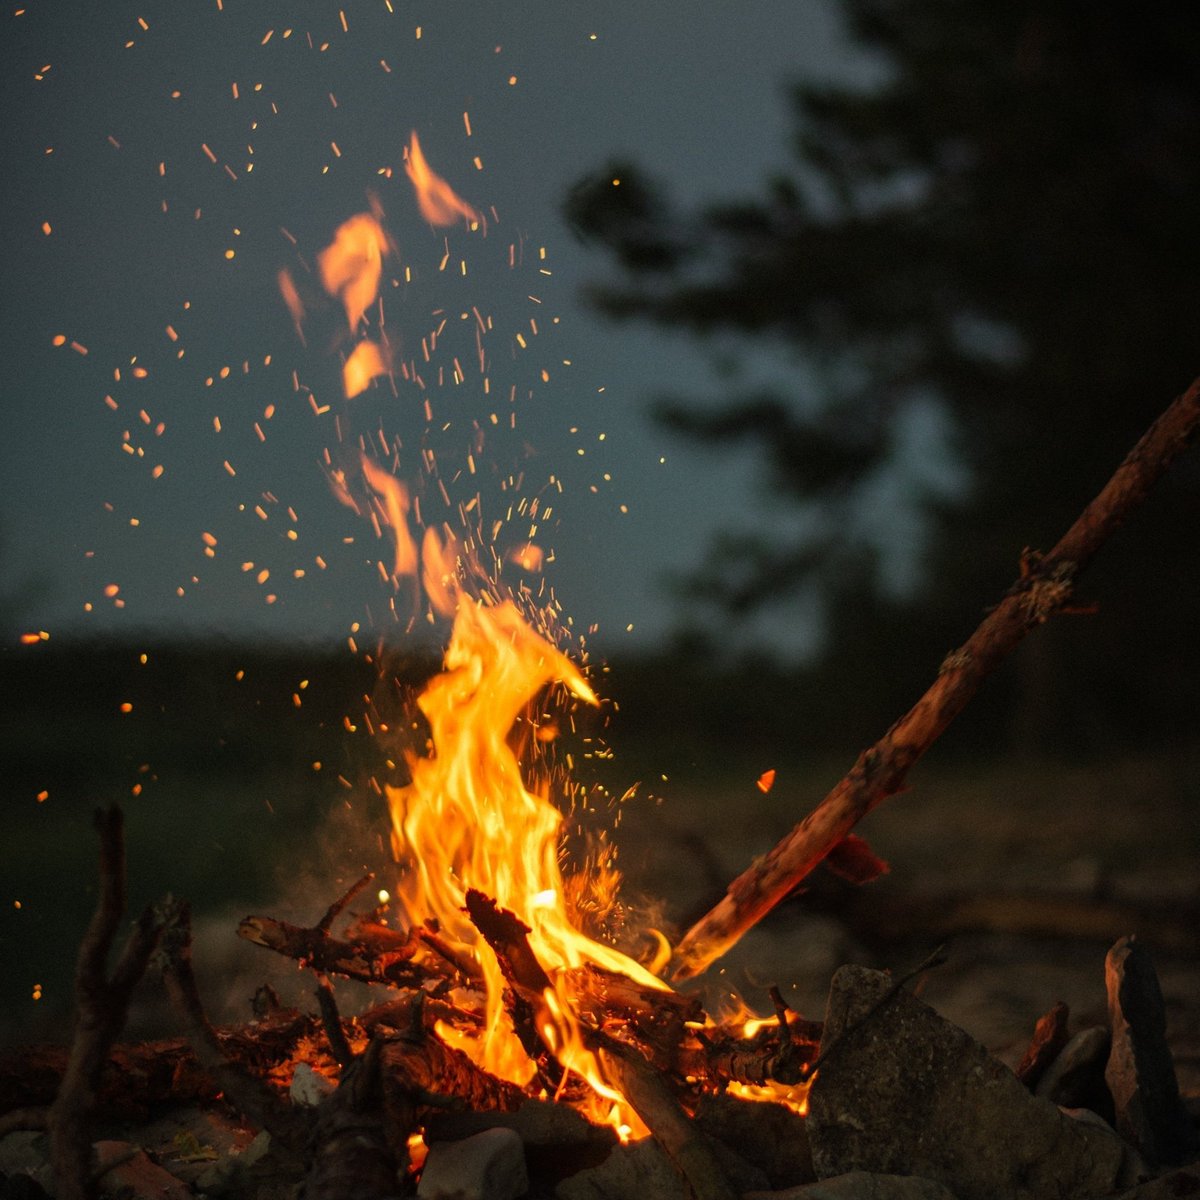 Learn Advanced Firelighting at Woodland Wellbeing this Friday! facebook.com/events/2314768…
#bushcraft #saffronwalden #woodlandwellbeing